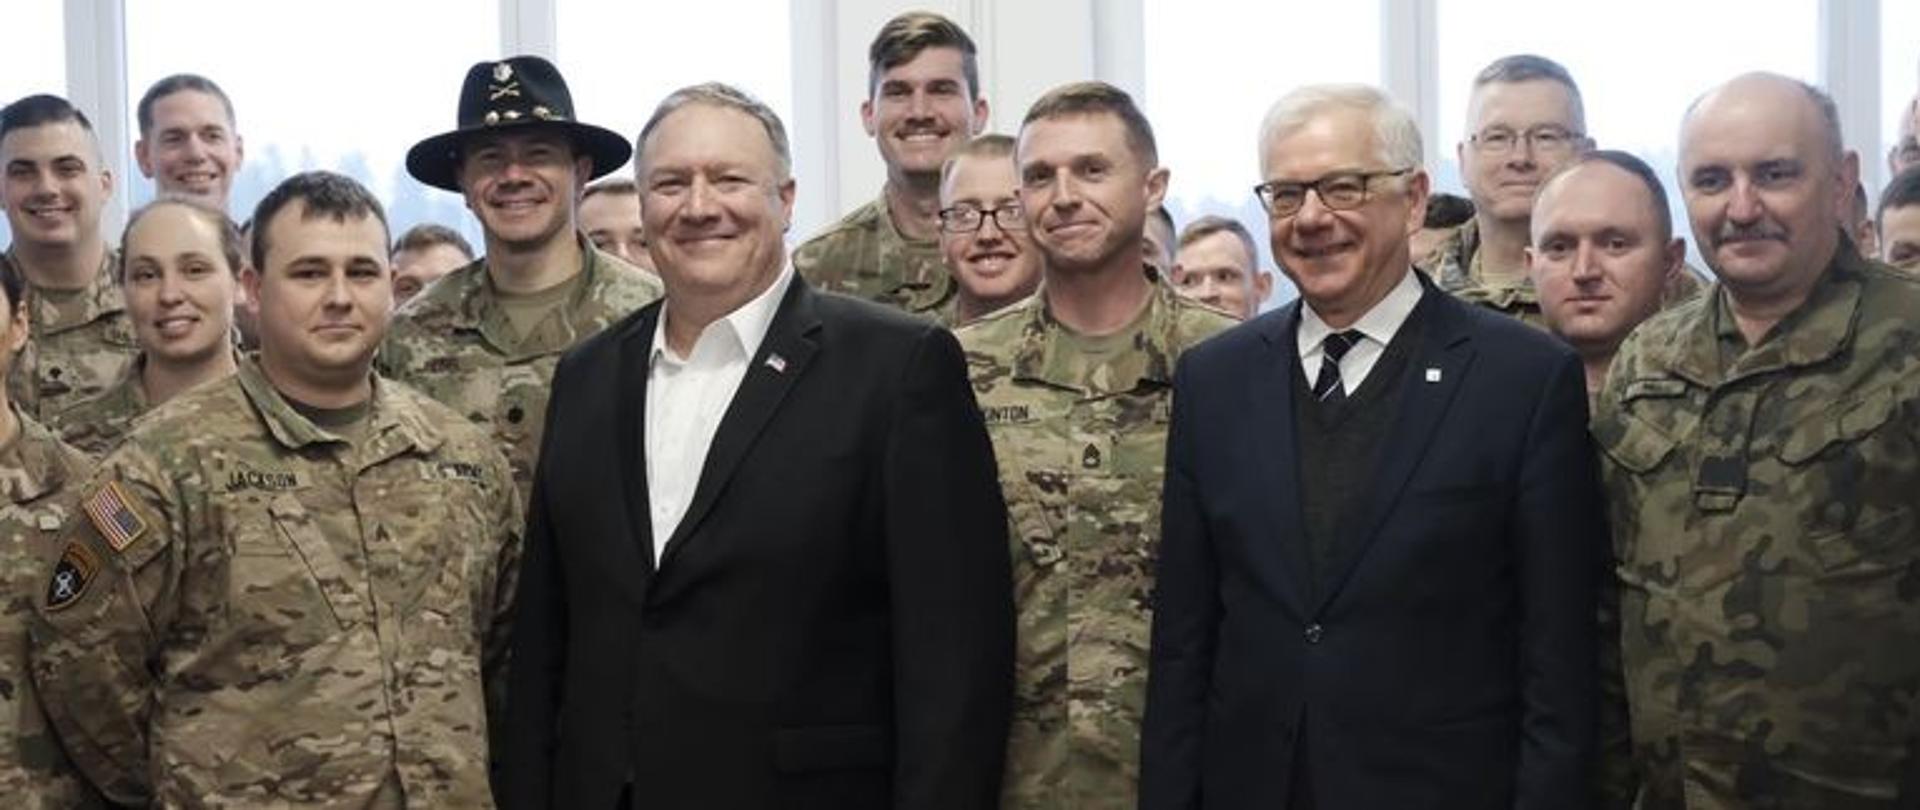 Minister Jacek Czaputowicz visits NATO troops in Bemowo Piskie